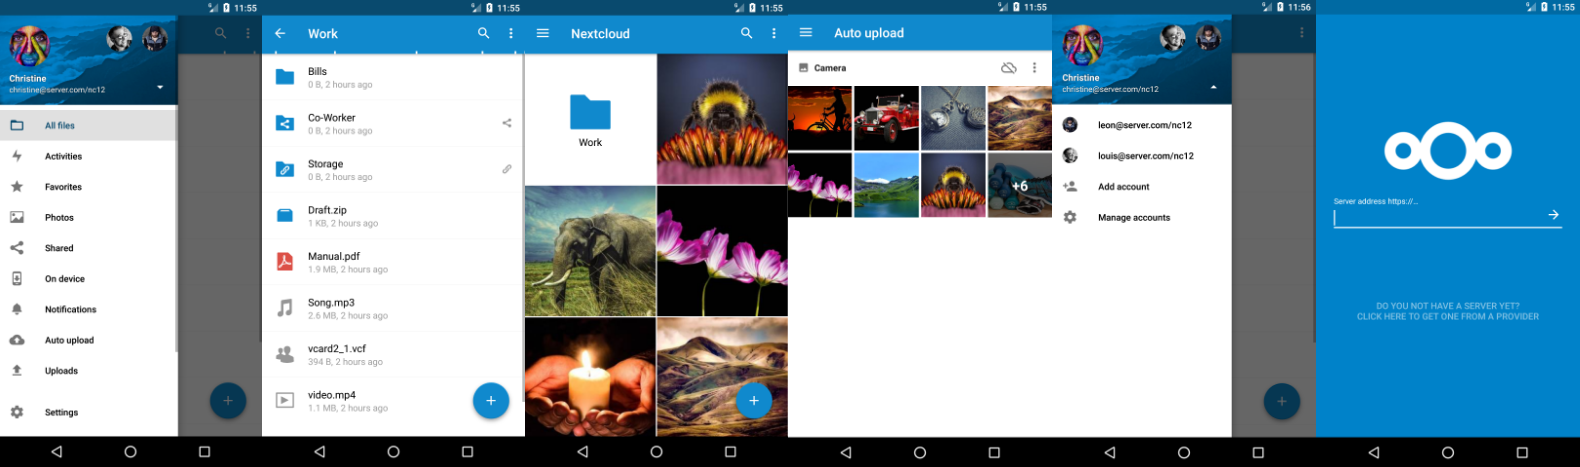 Nextcloud_Android_Screenshots.png